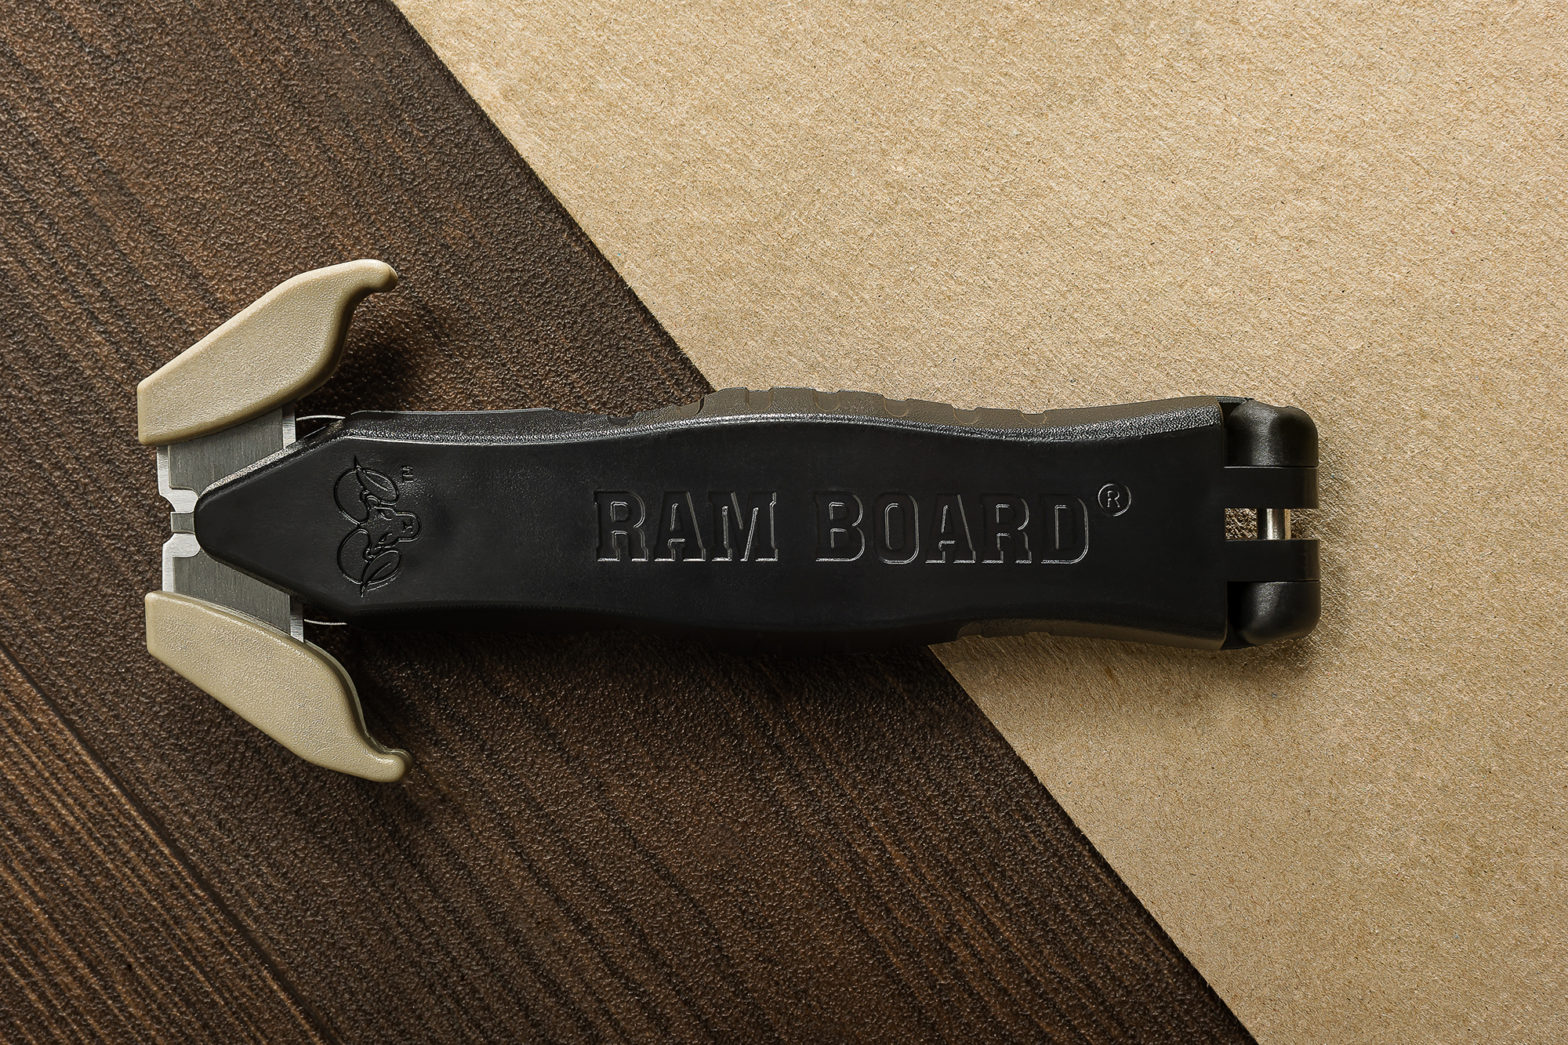 Ram Board’s Multi-Cutter Gets an Upgrade